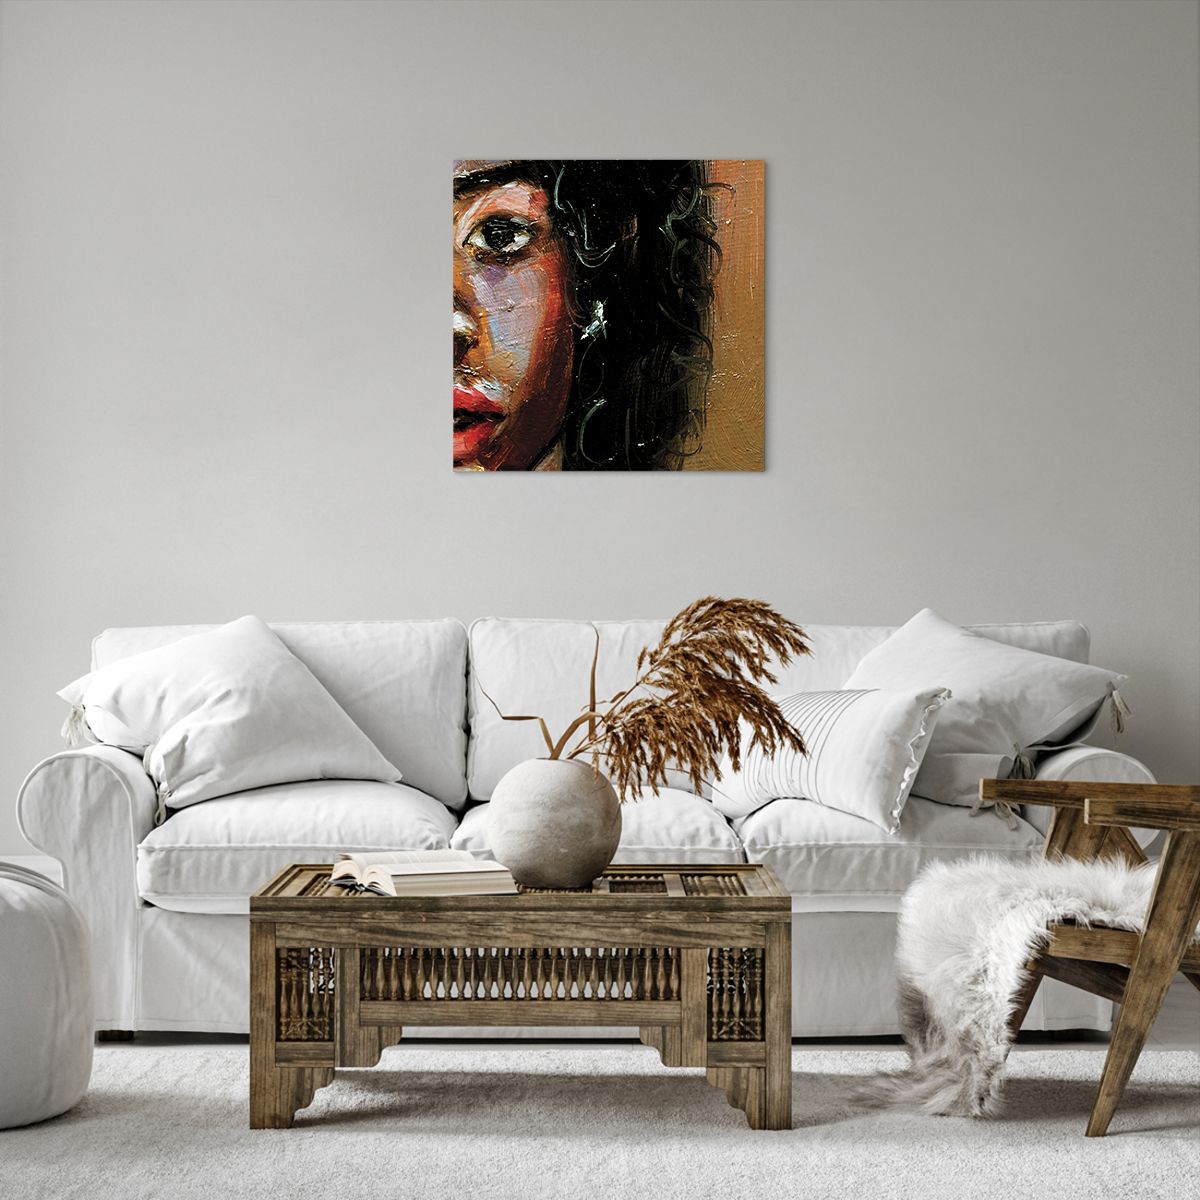 Cuadro sobre lienzo Retrato De Una Mujer, Cuadro sobre lienzo Mujer, Cuadro sobre lienzo Afroamericano, Cuadro sobre lienzo Arte, Cuadro sobre lienzo Cuadro